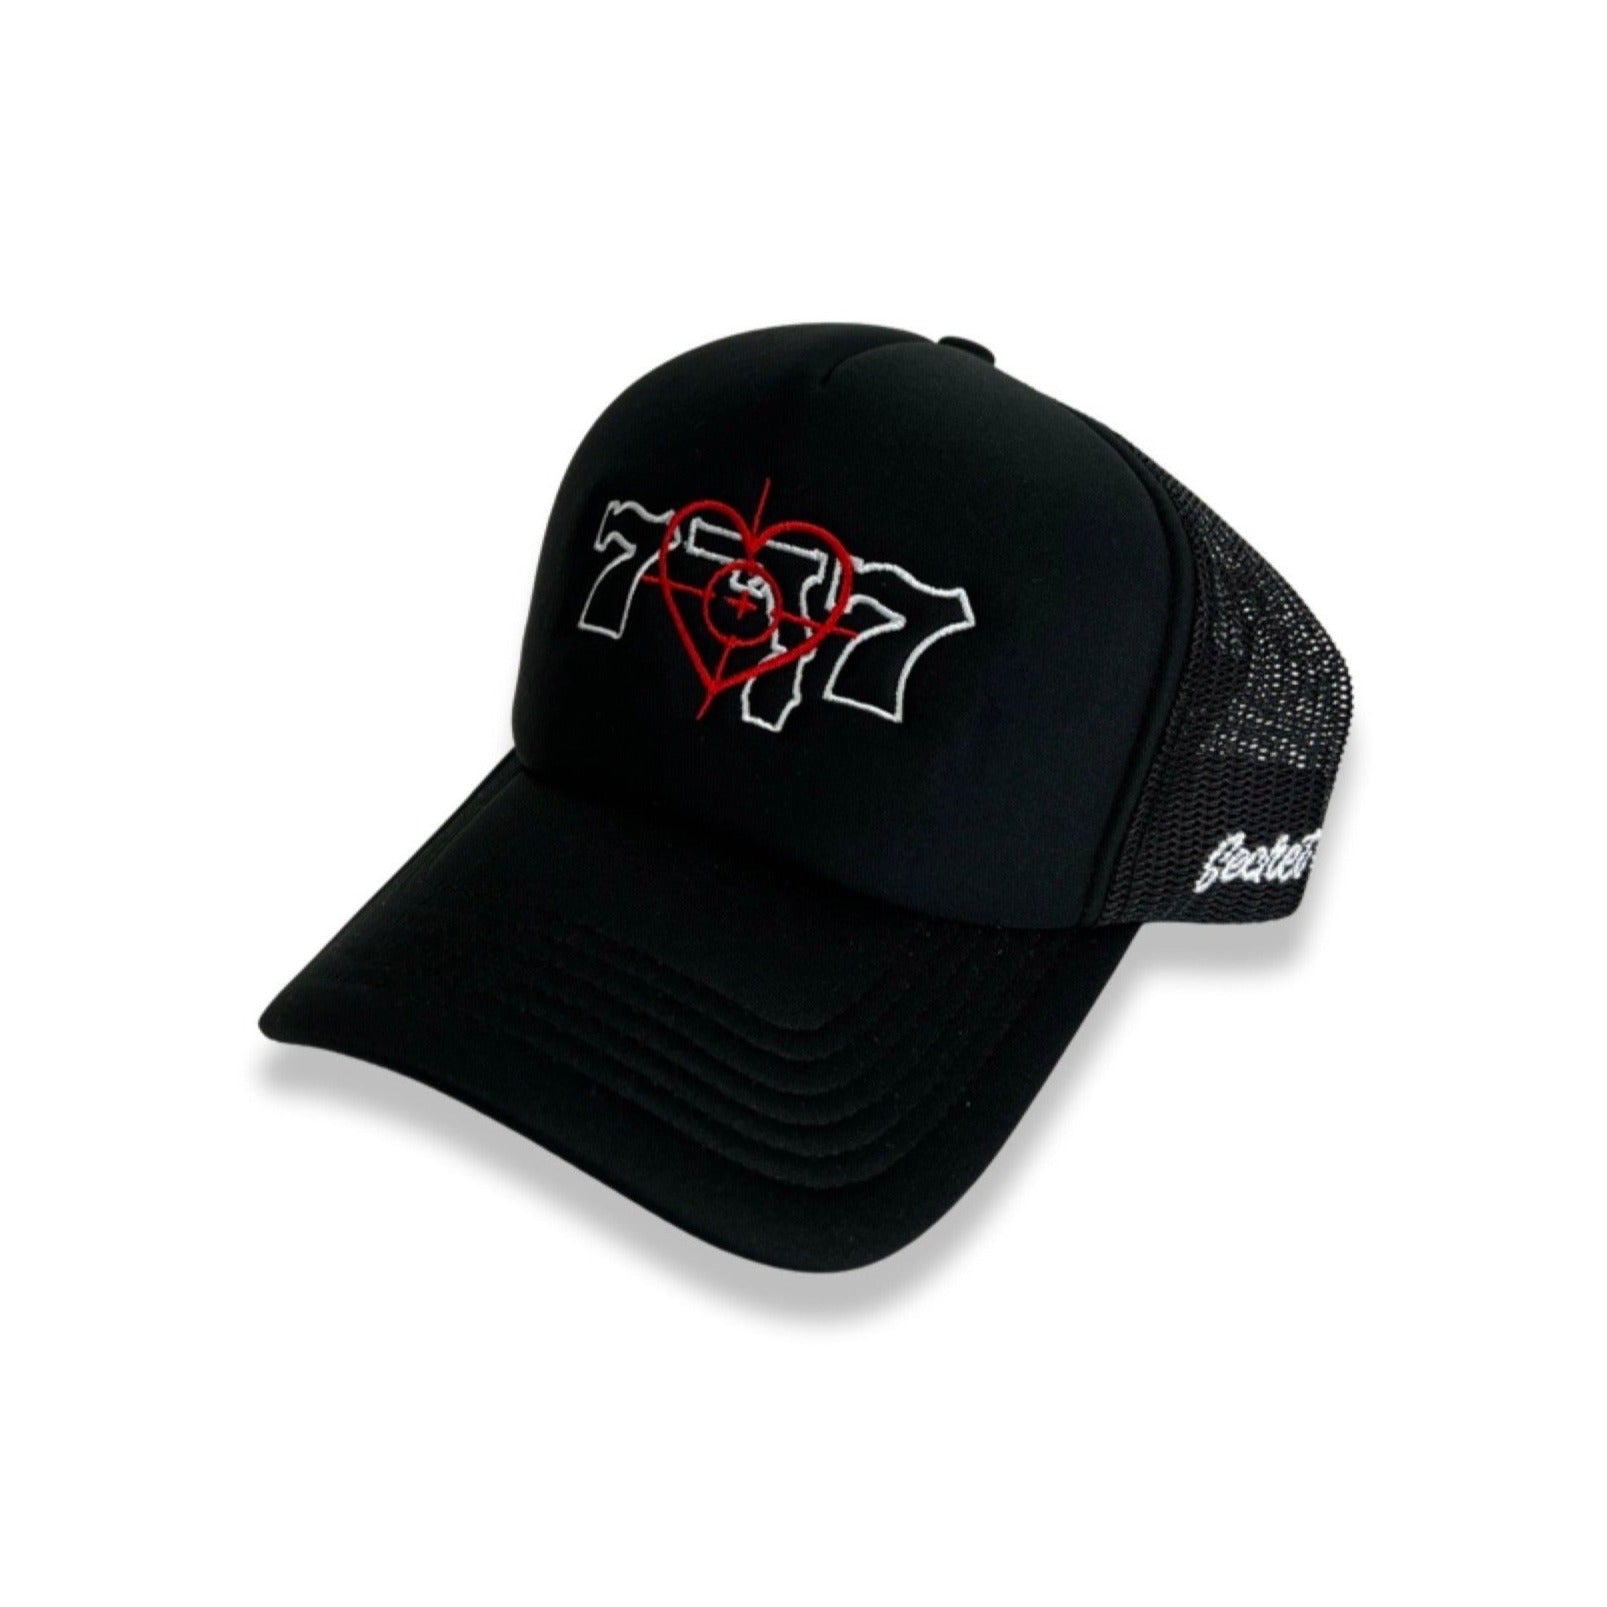 Black 777 Trucker Hat (Red Cross Hairs)